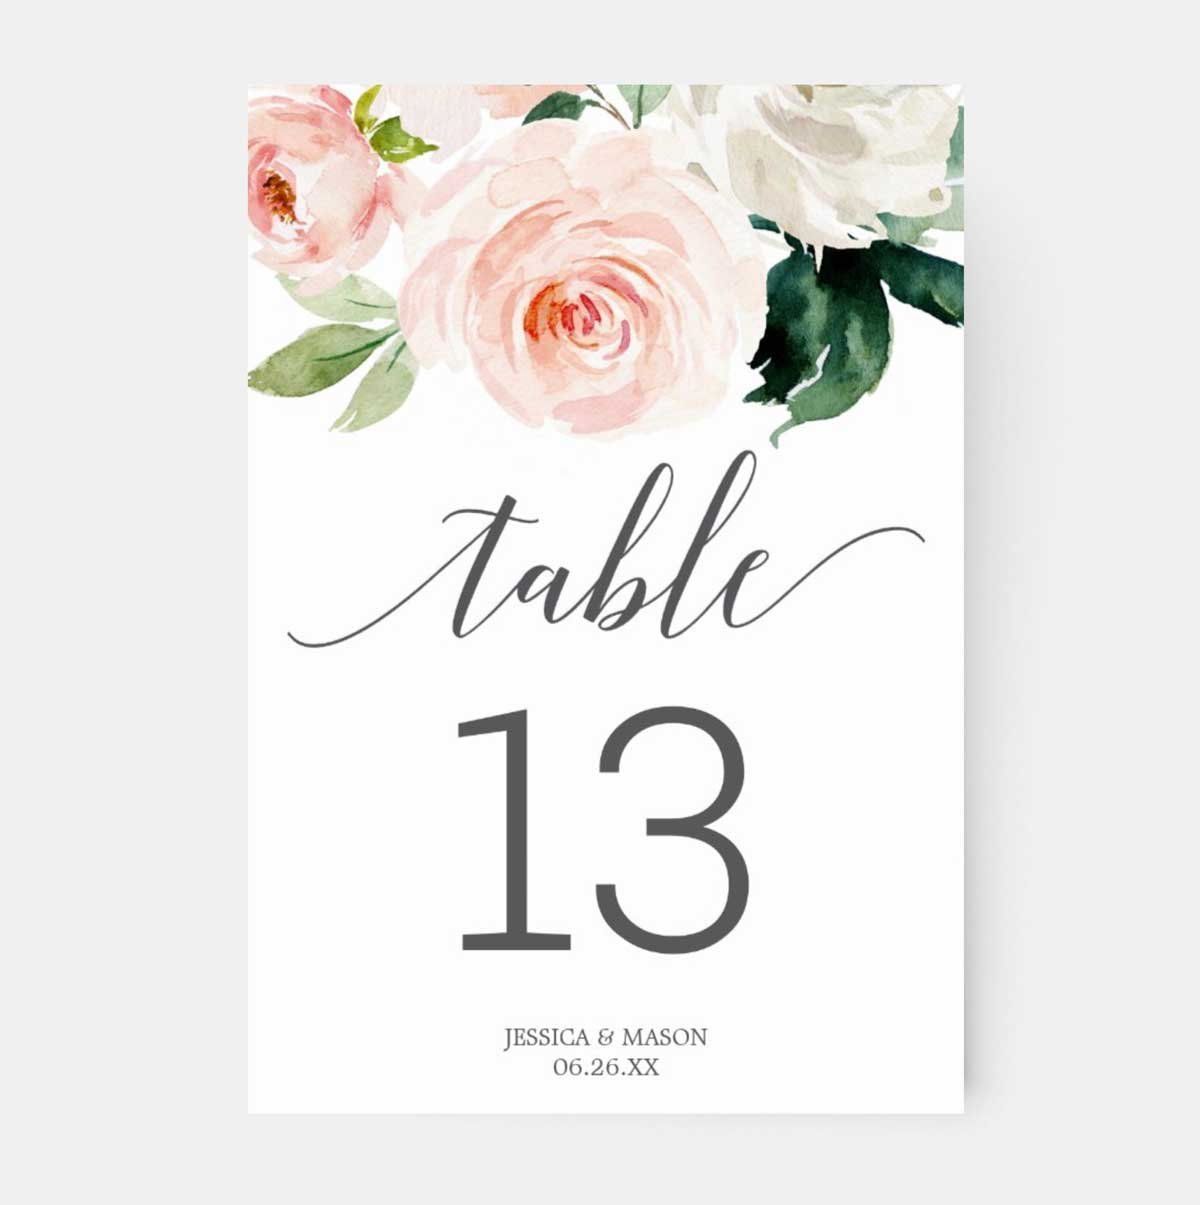 Wedding Table Numbers